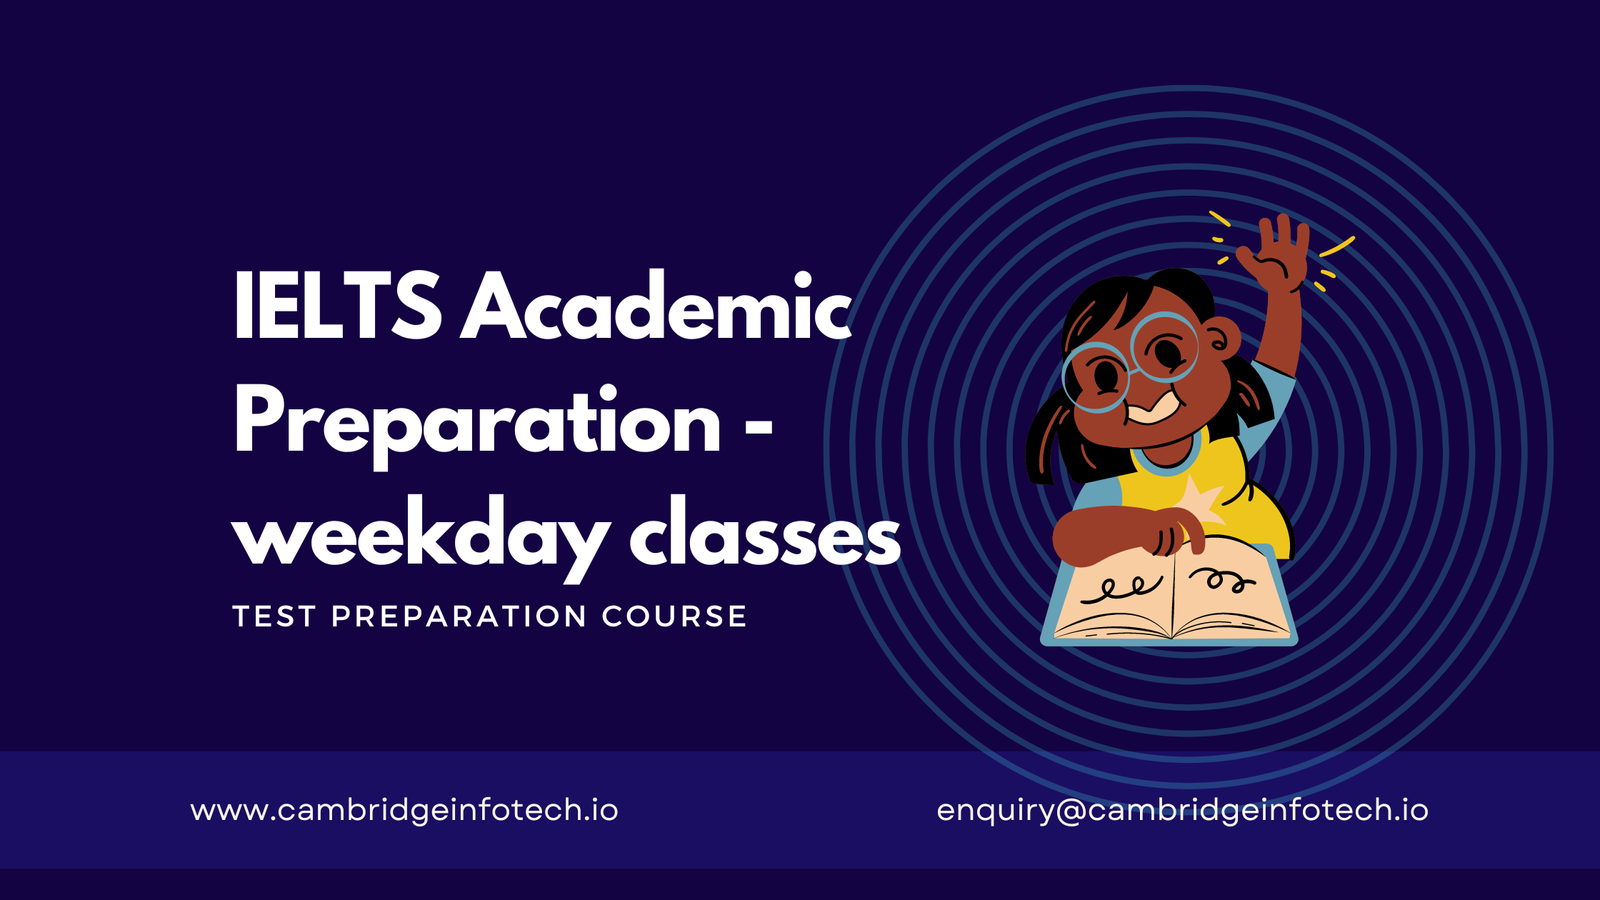 IELTS Academic Preparation - weekday classes